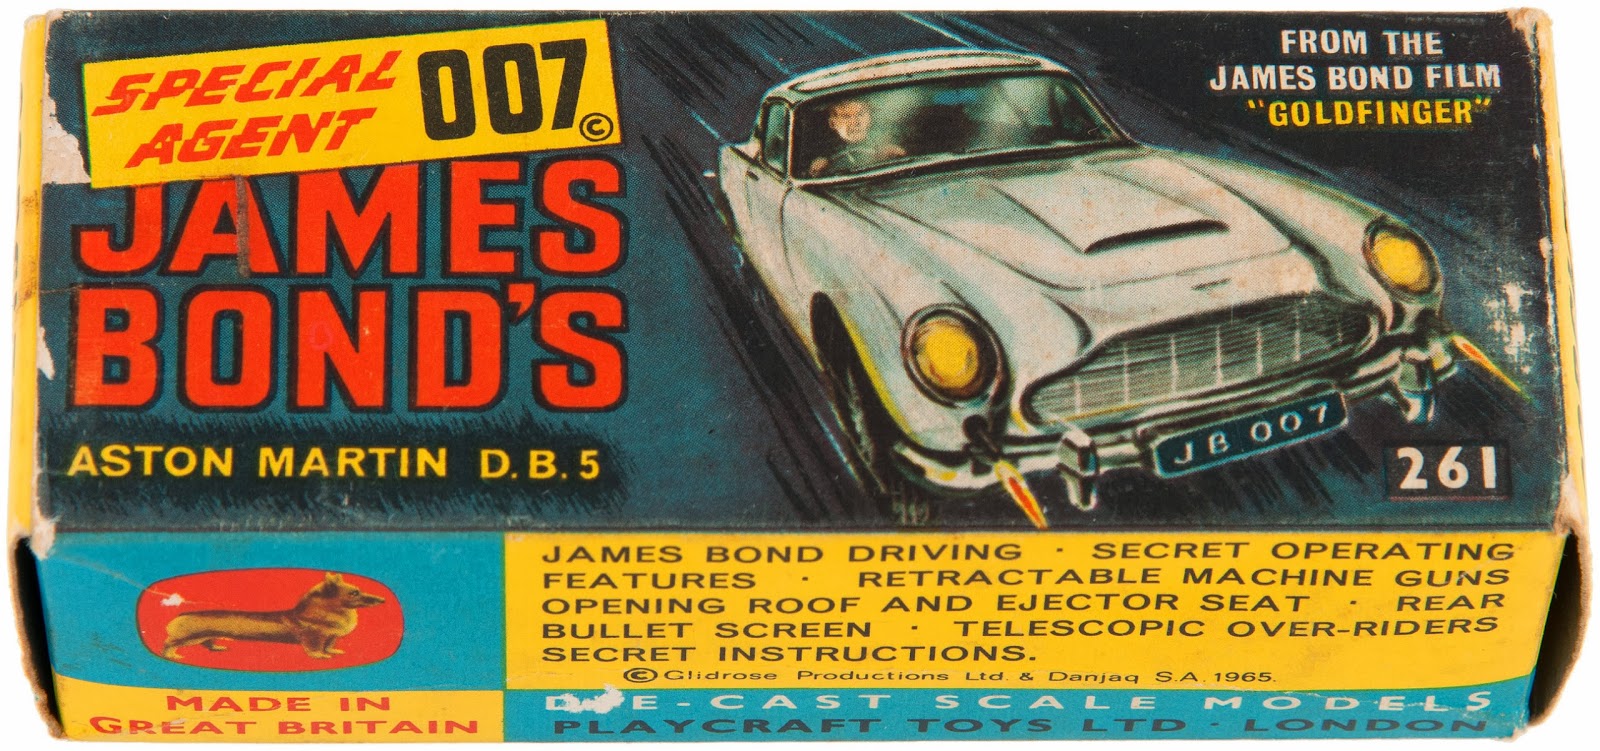 bondtoddbond: James Bond and Man From U.N.C.L.E. and Spy Collecting ...